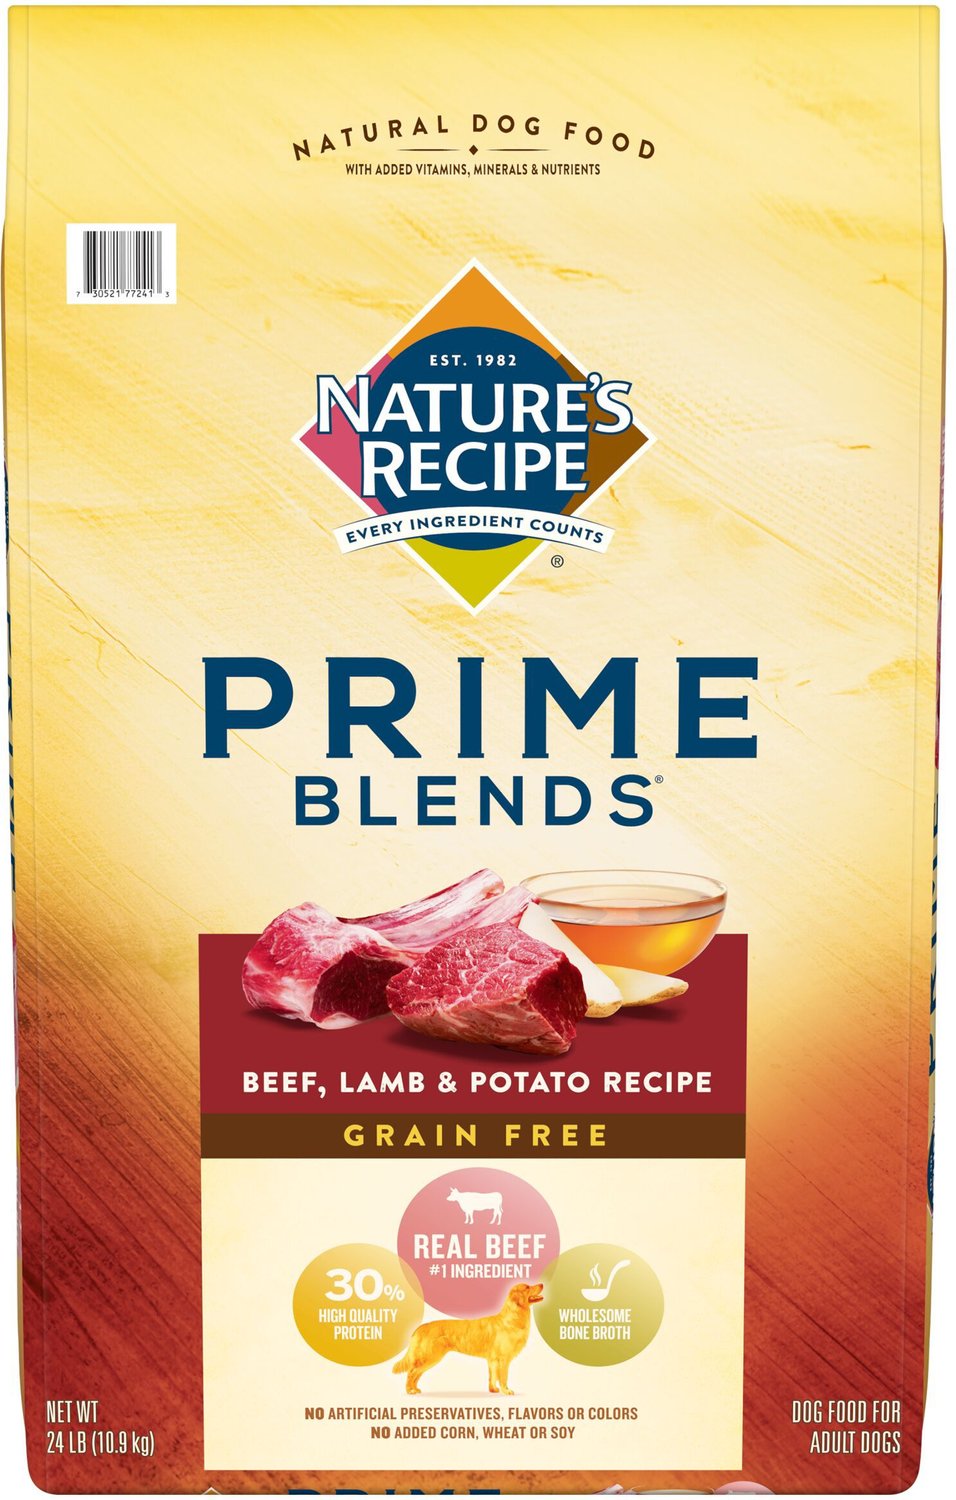 NATURE'S RECIPE Prime Blends Beef, Lamb, and Potato Recipe GrainFree